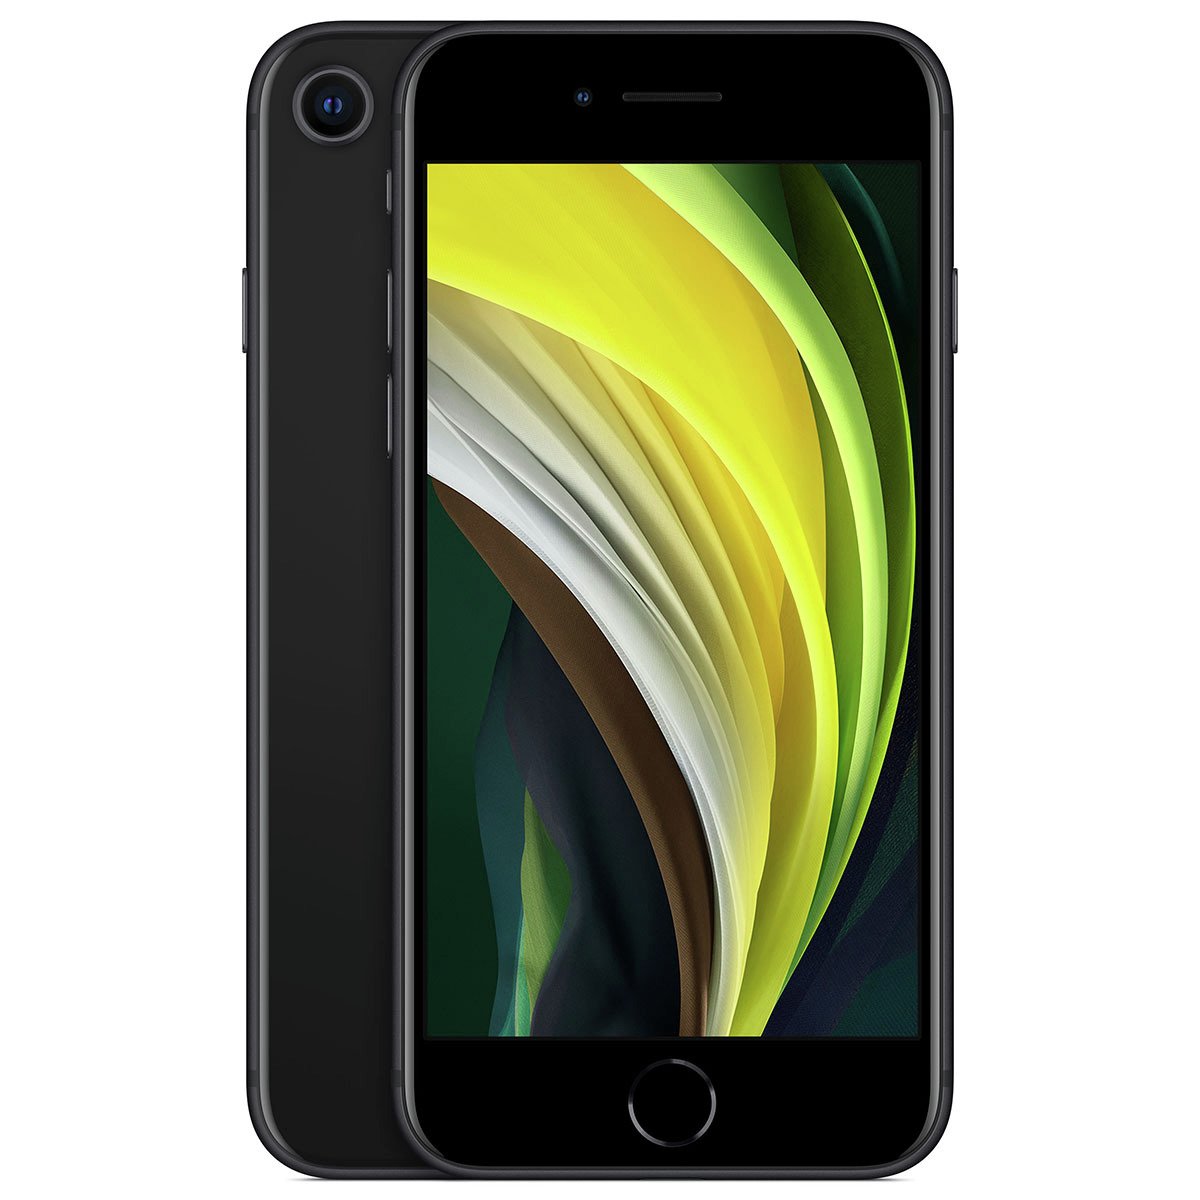 SIM Free iPhone SE 256GB Mobile Phone - Black